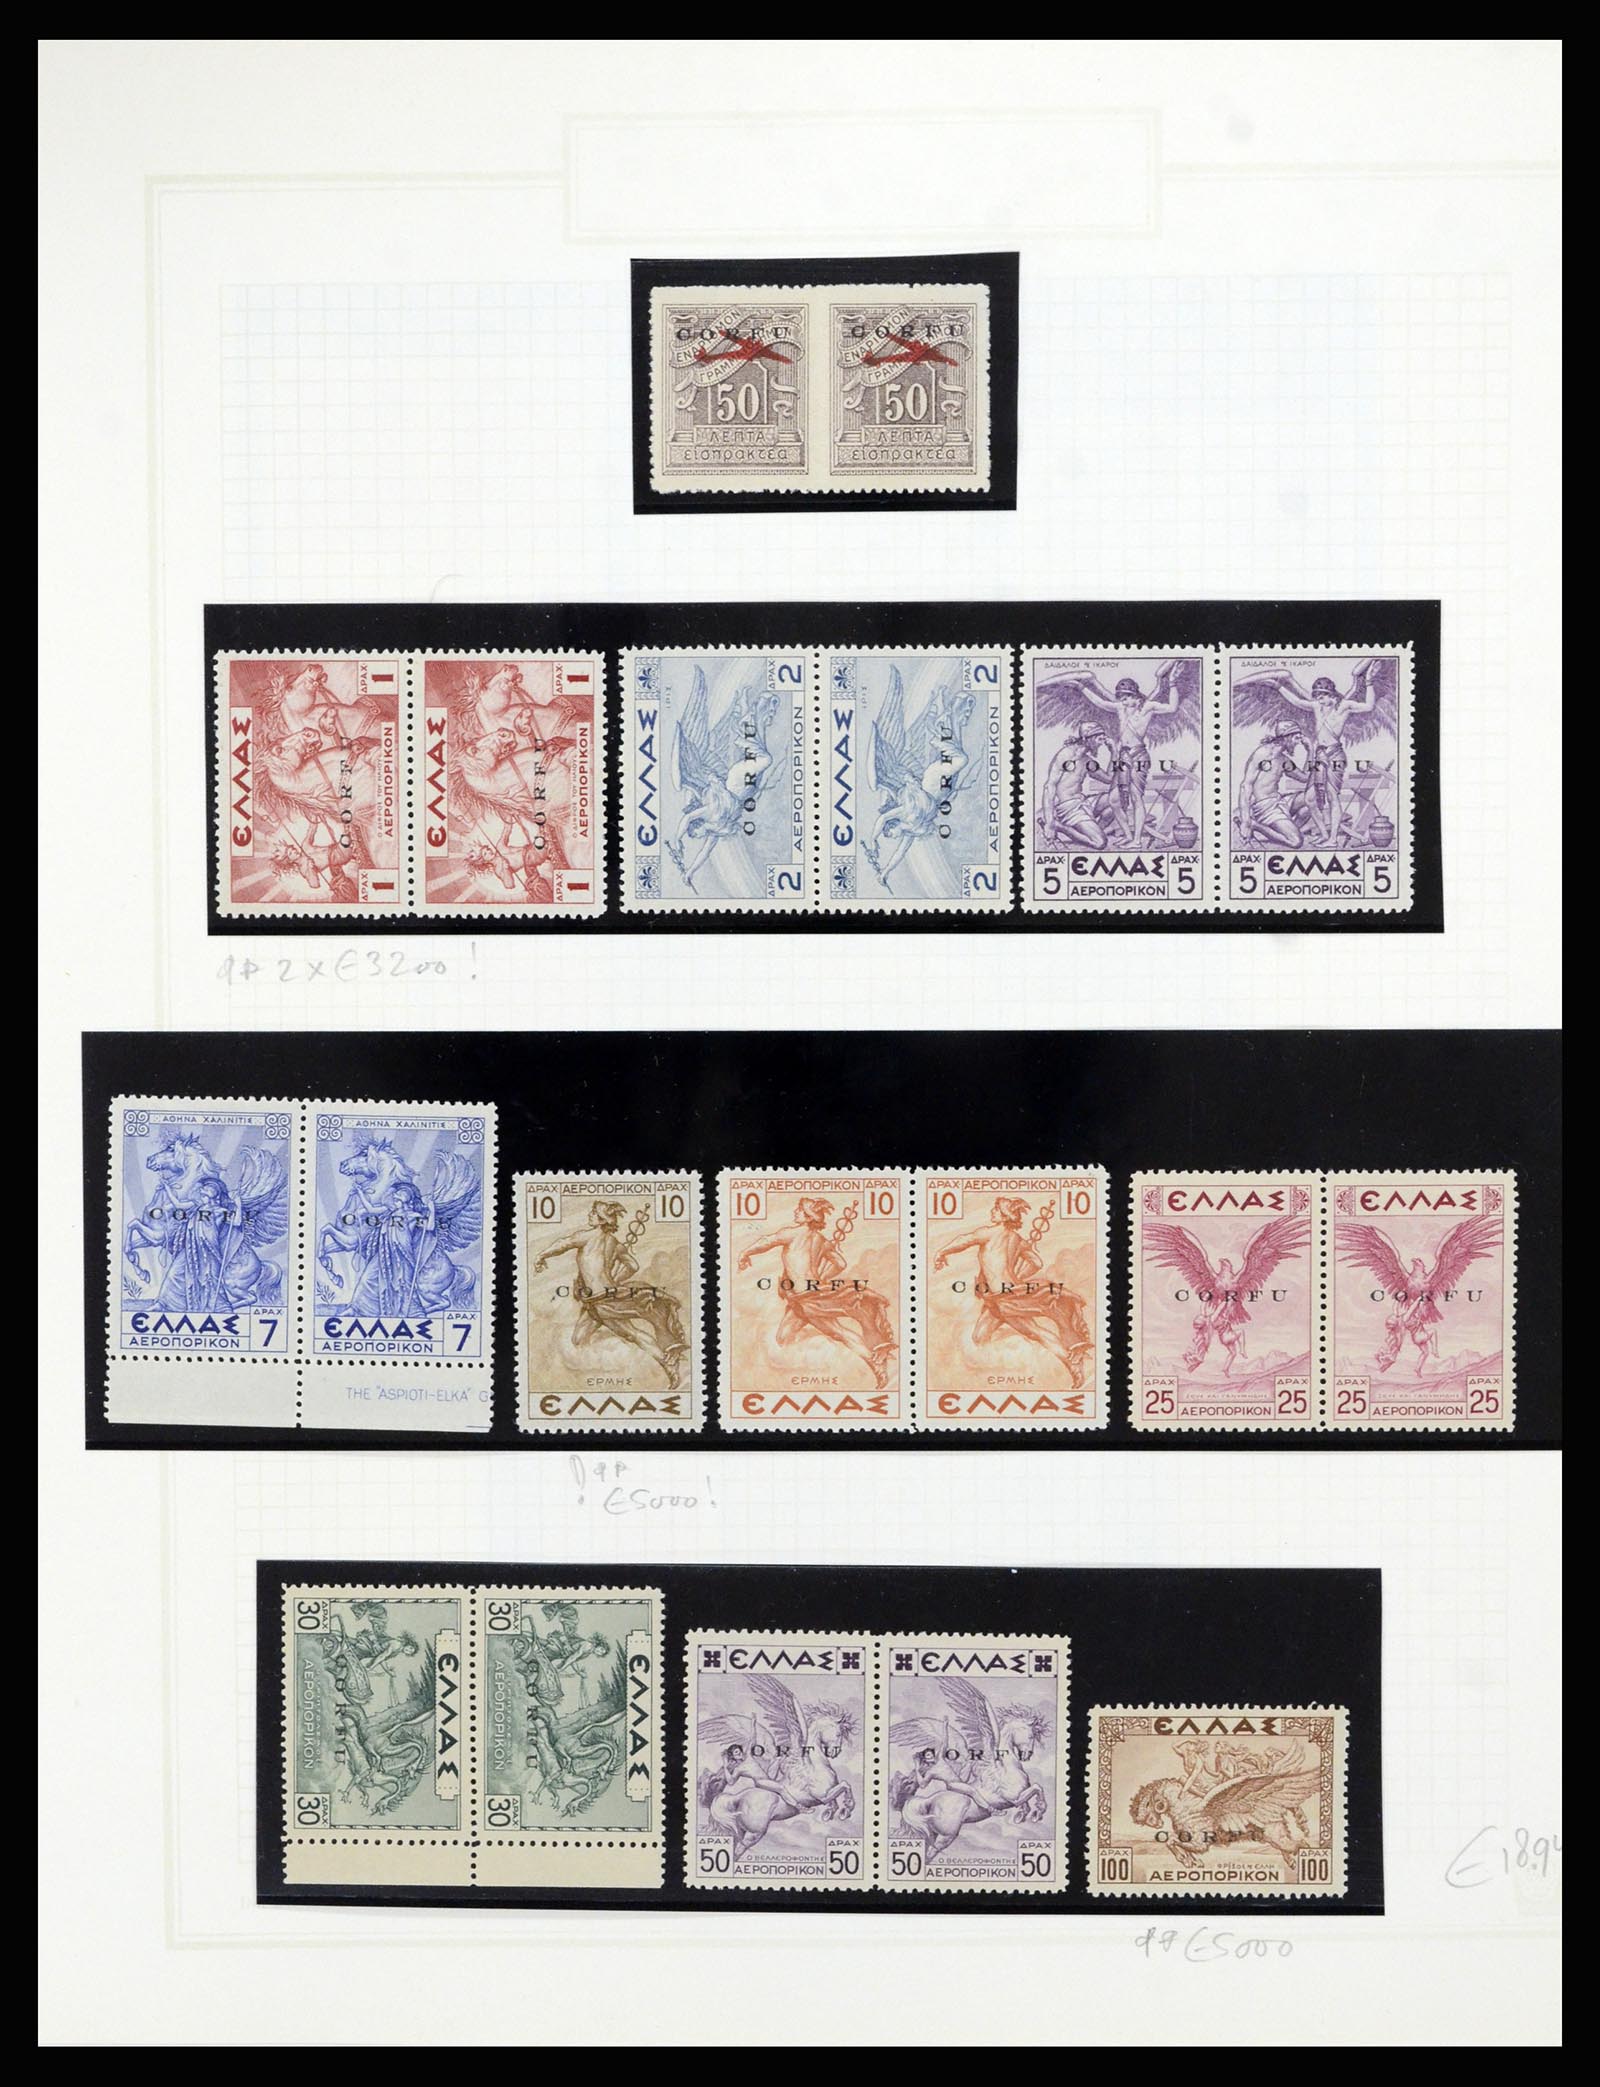 37040 006 - Stamp collection 37040 Italian occupation Corfu 1941.